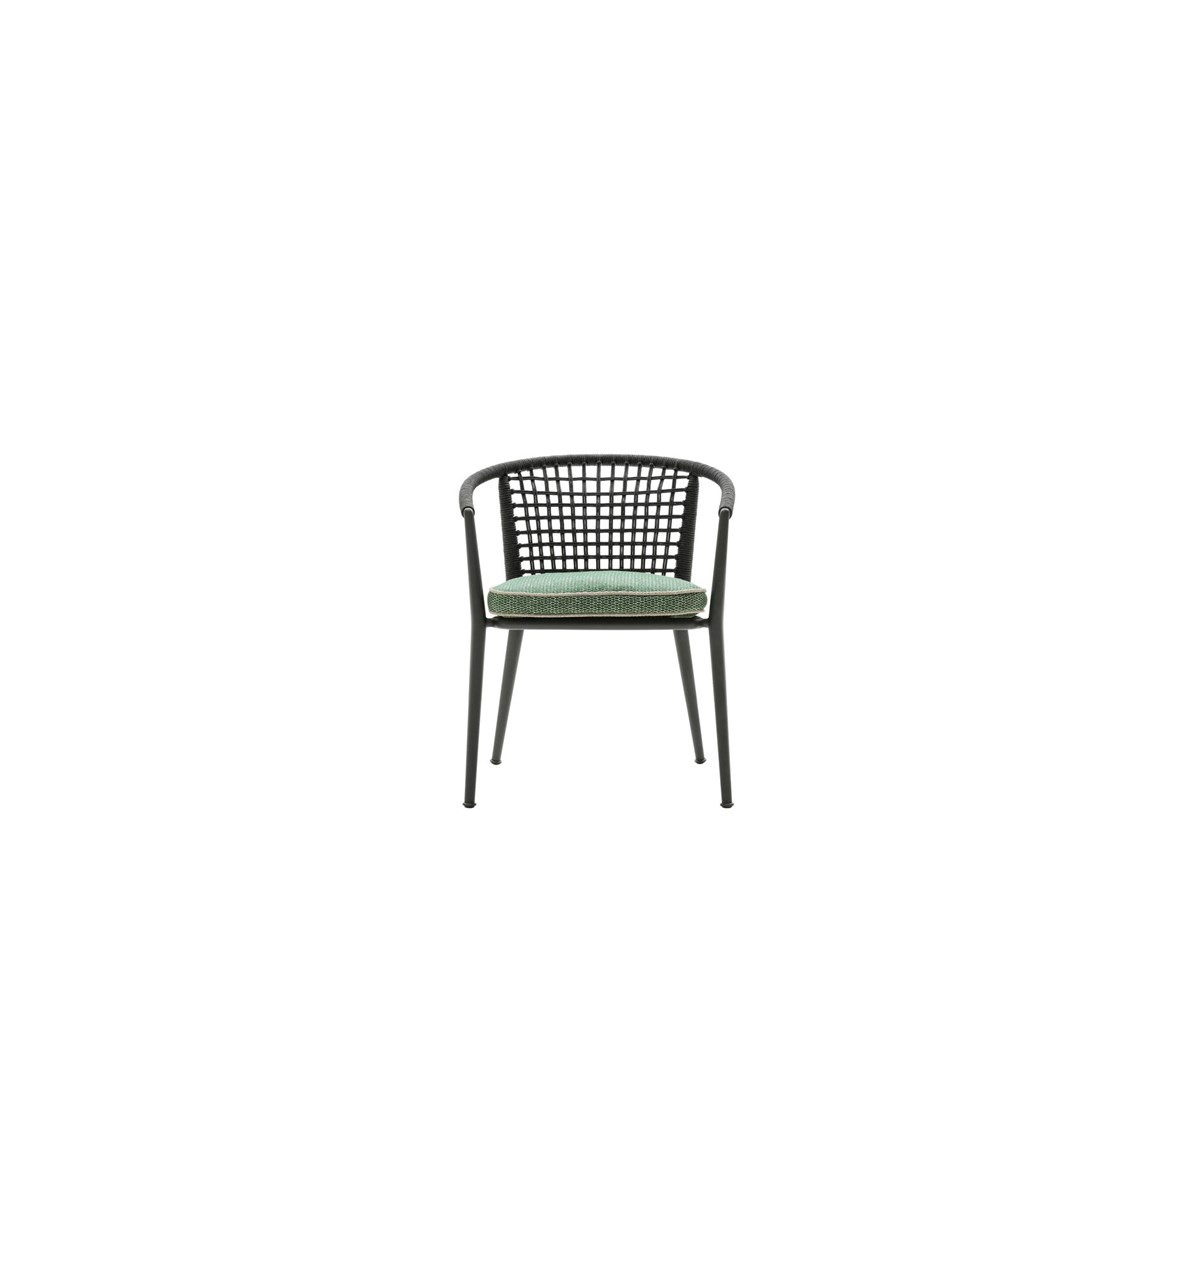 Thisslider 0 108 Outdoor Chair Erica 19 01 Miniatura